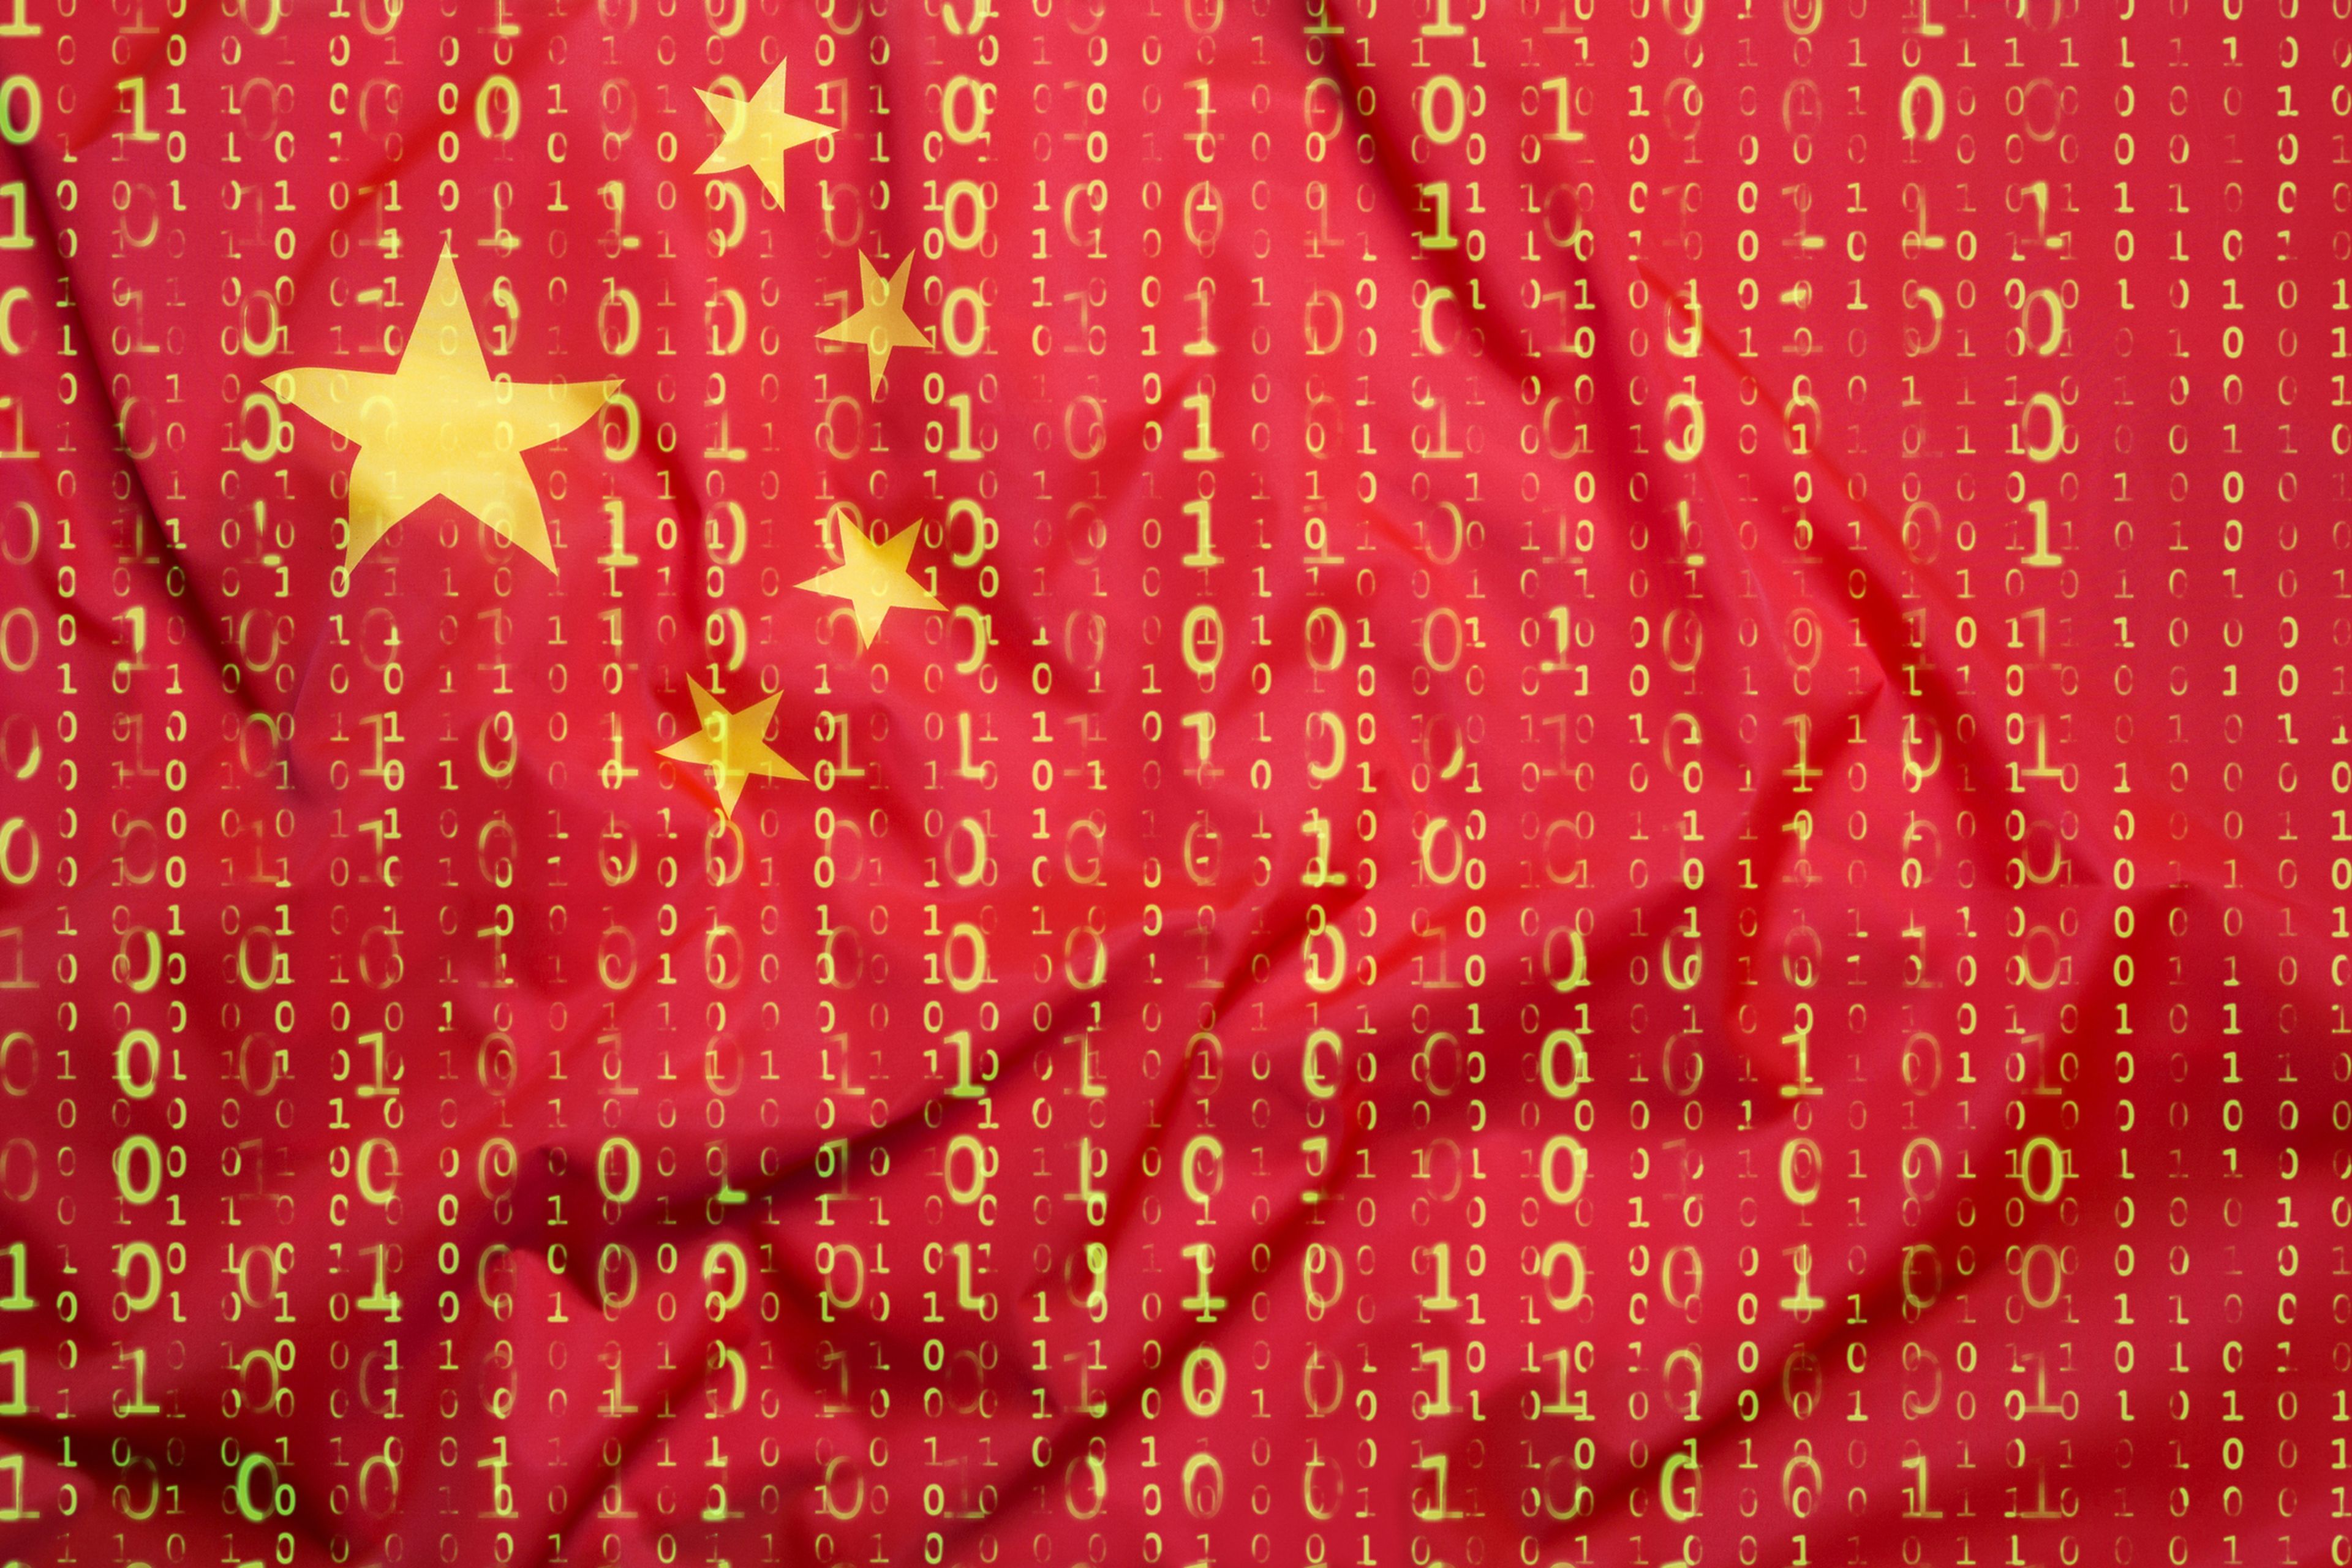 China ciberseguridad